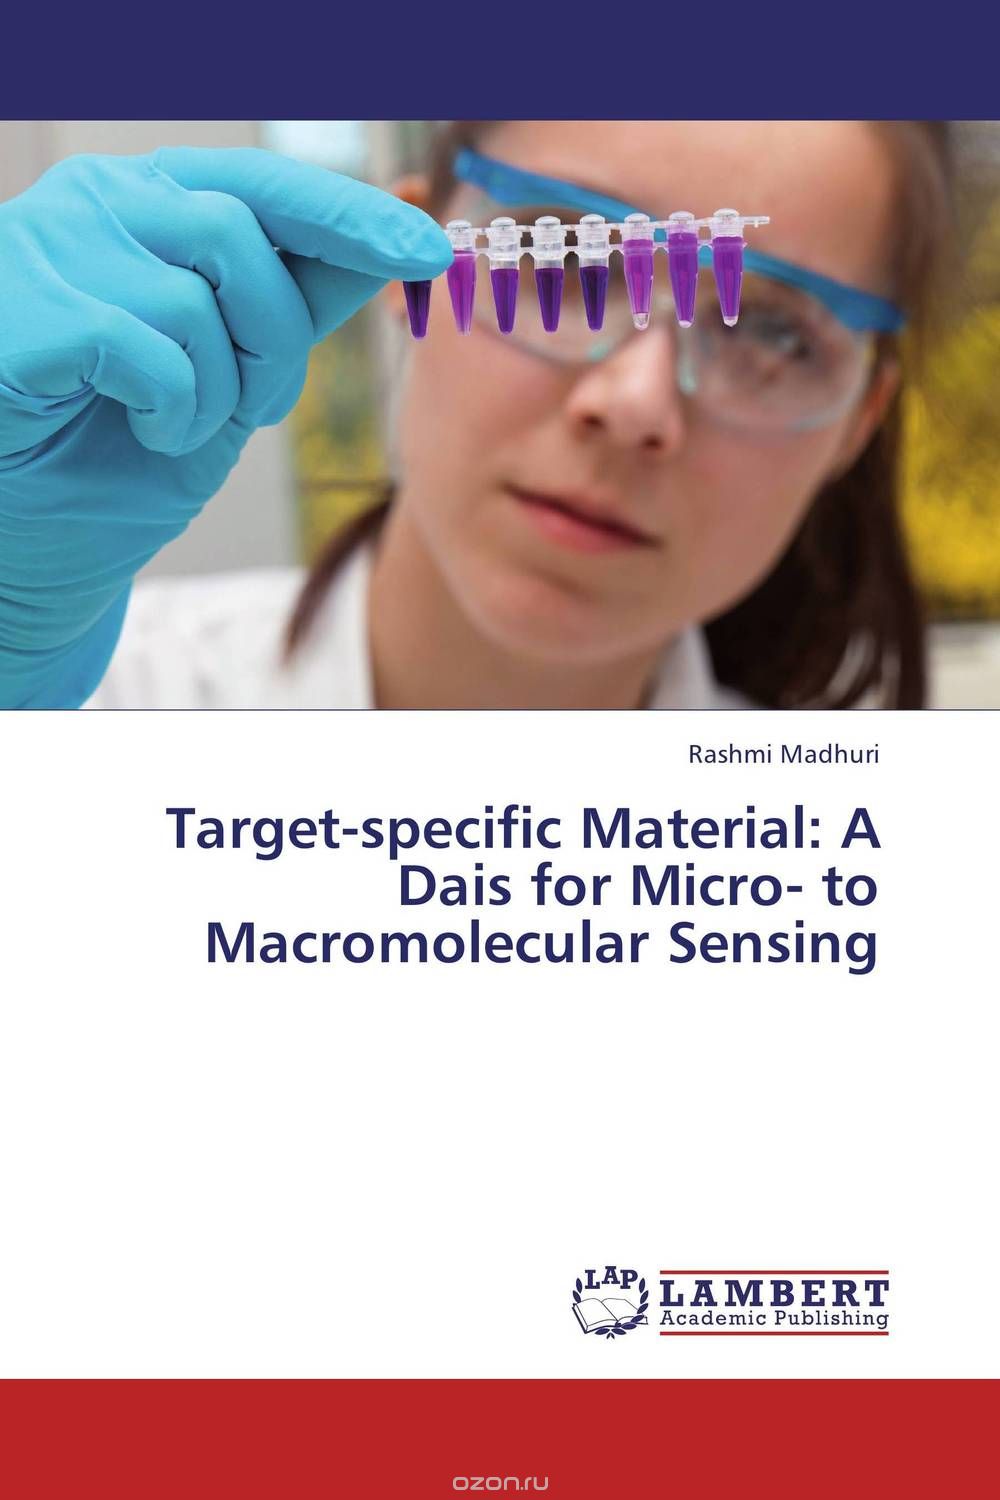 Скачать книгу "Target-specific Material: A Dais for Micro- to Macromolecular Sensing"